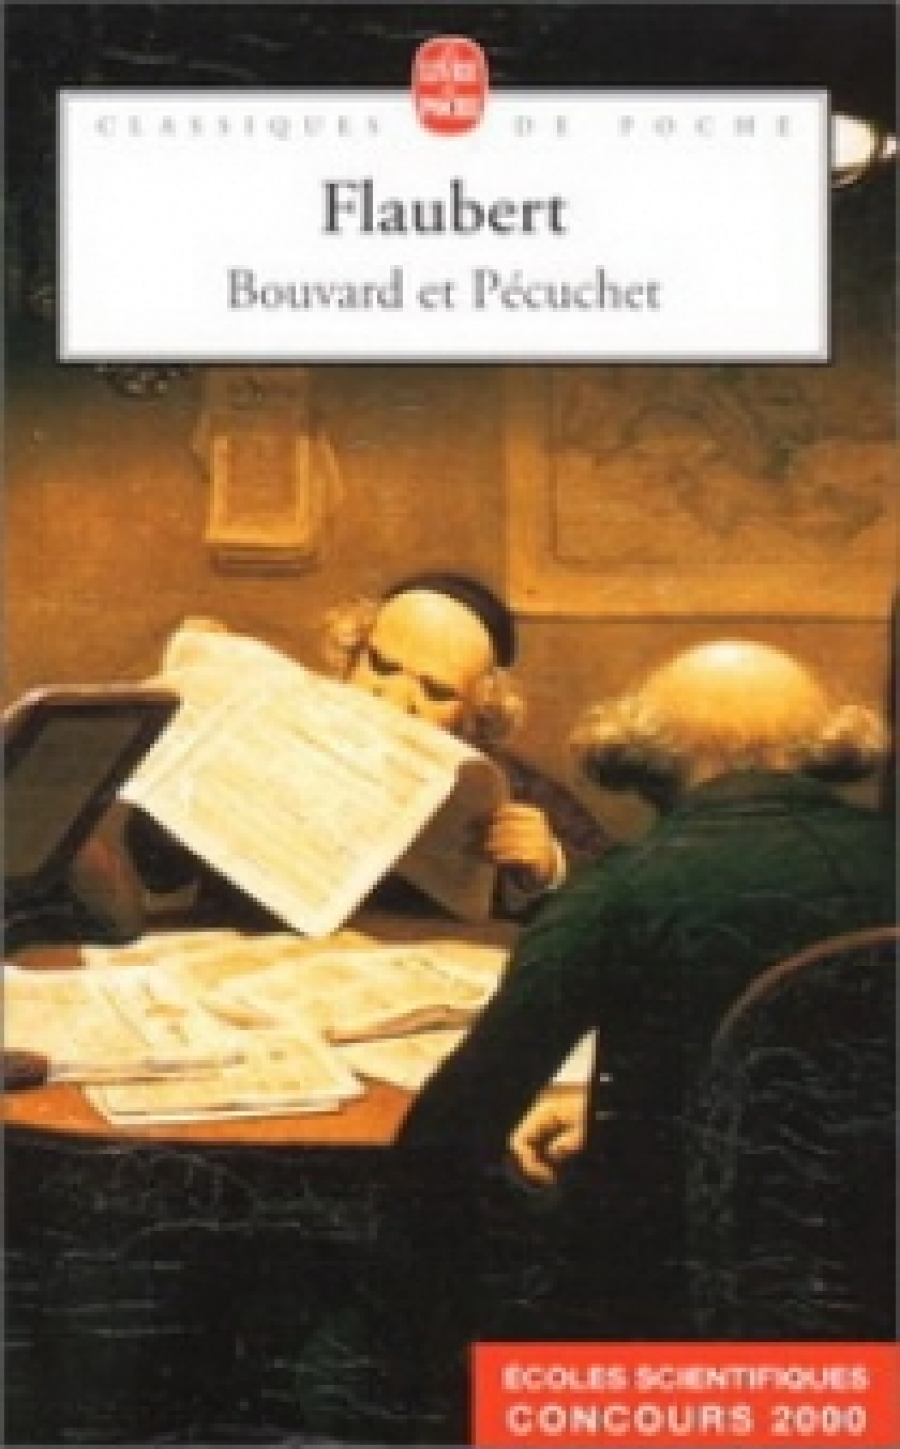 Gustave F. Bouvard et Pecuchet 